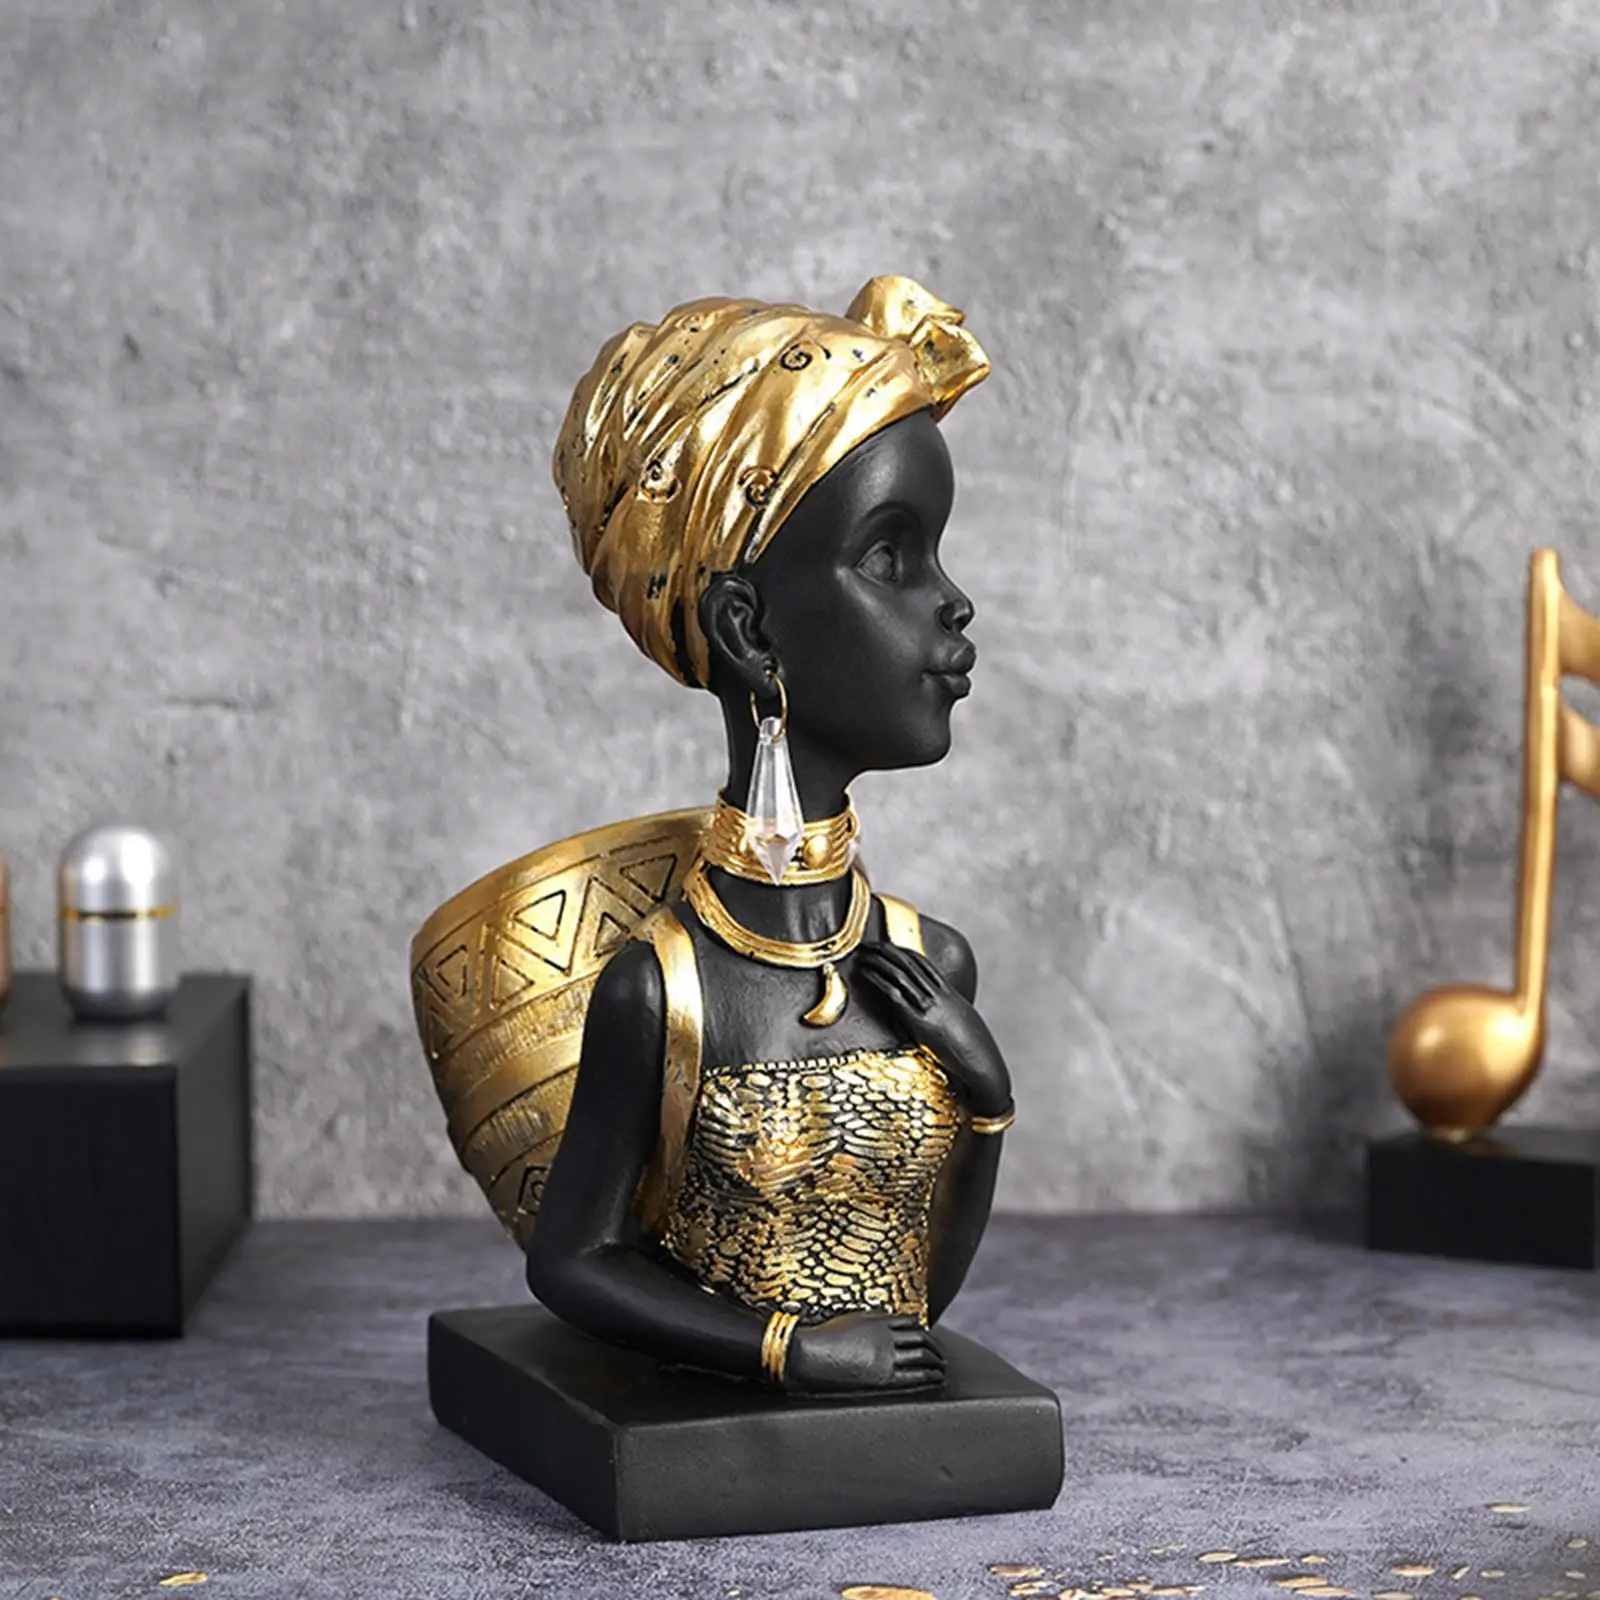 Decorative Lady Statue Sculpture African Collectible Resin Ornament Decor for Bookshelf Bedroom Decor Hotel Desk